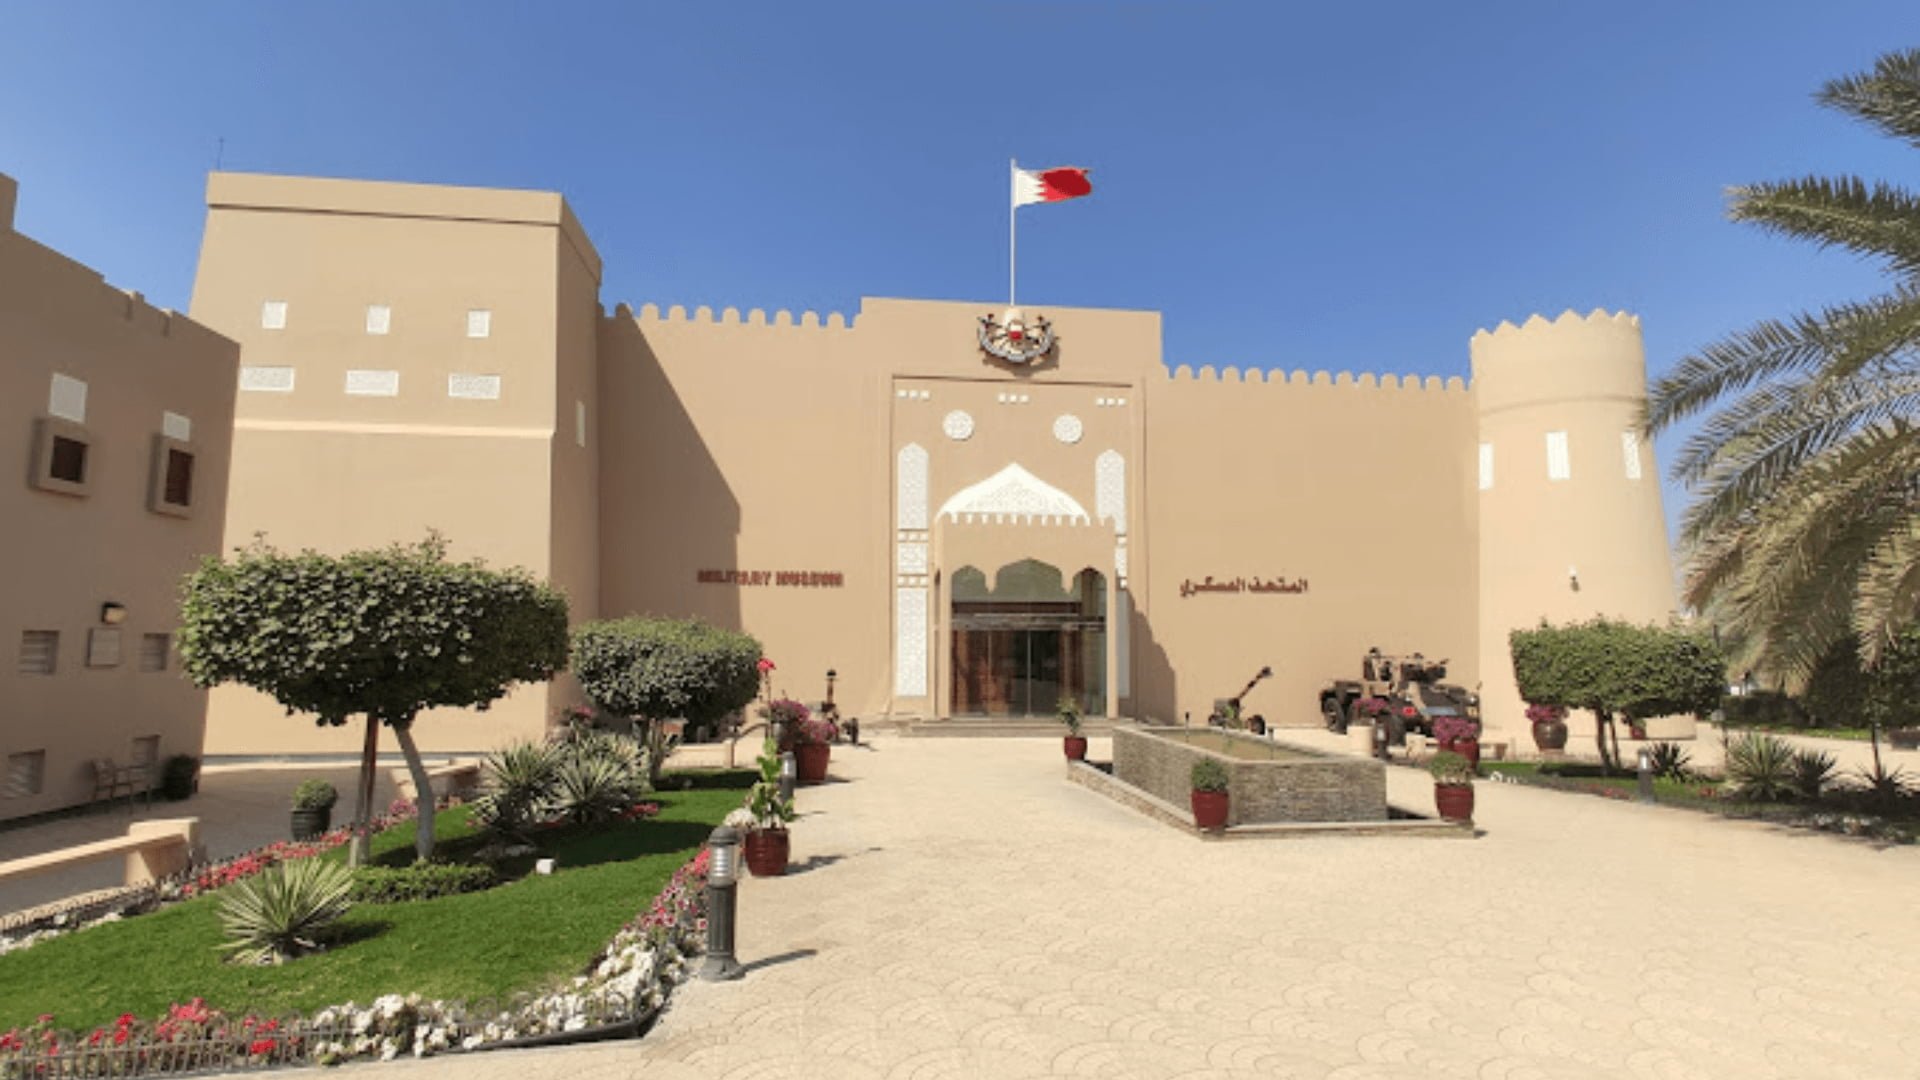 Bahrain Military Museum - Military Museum in Bahrain